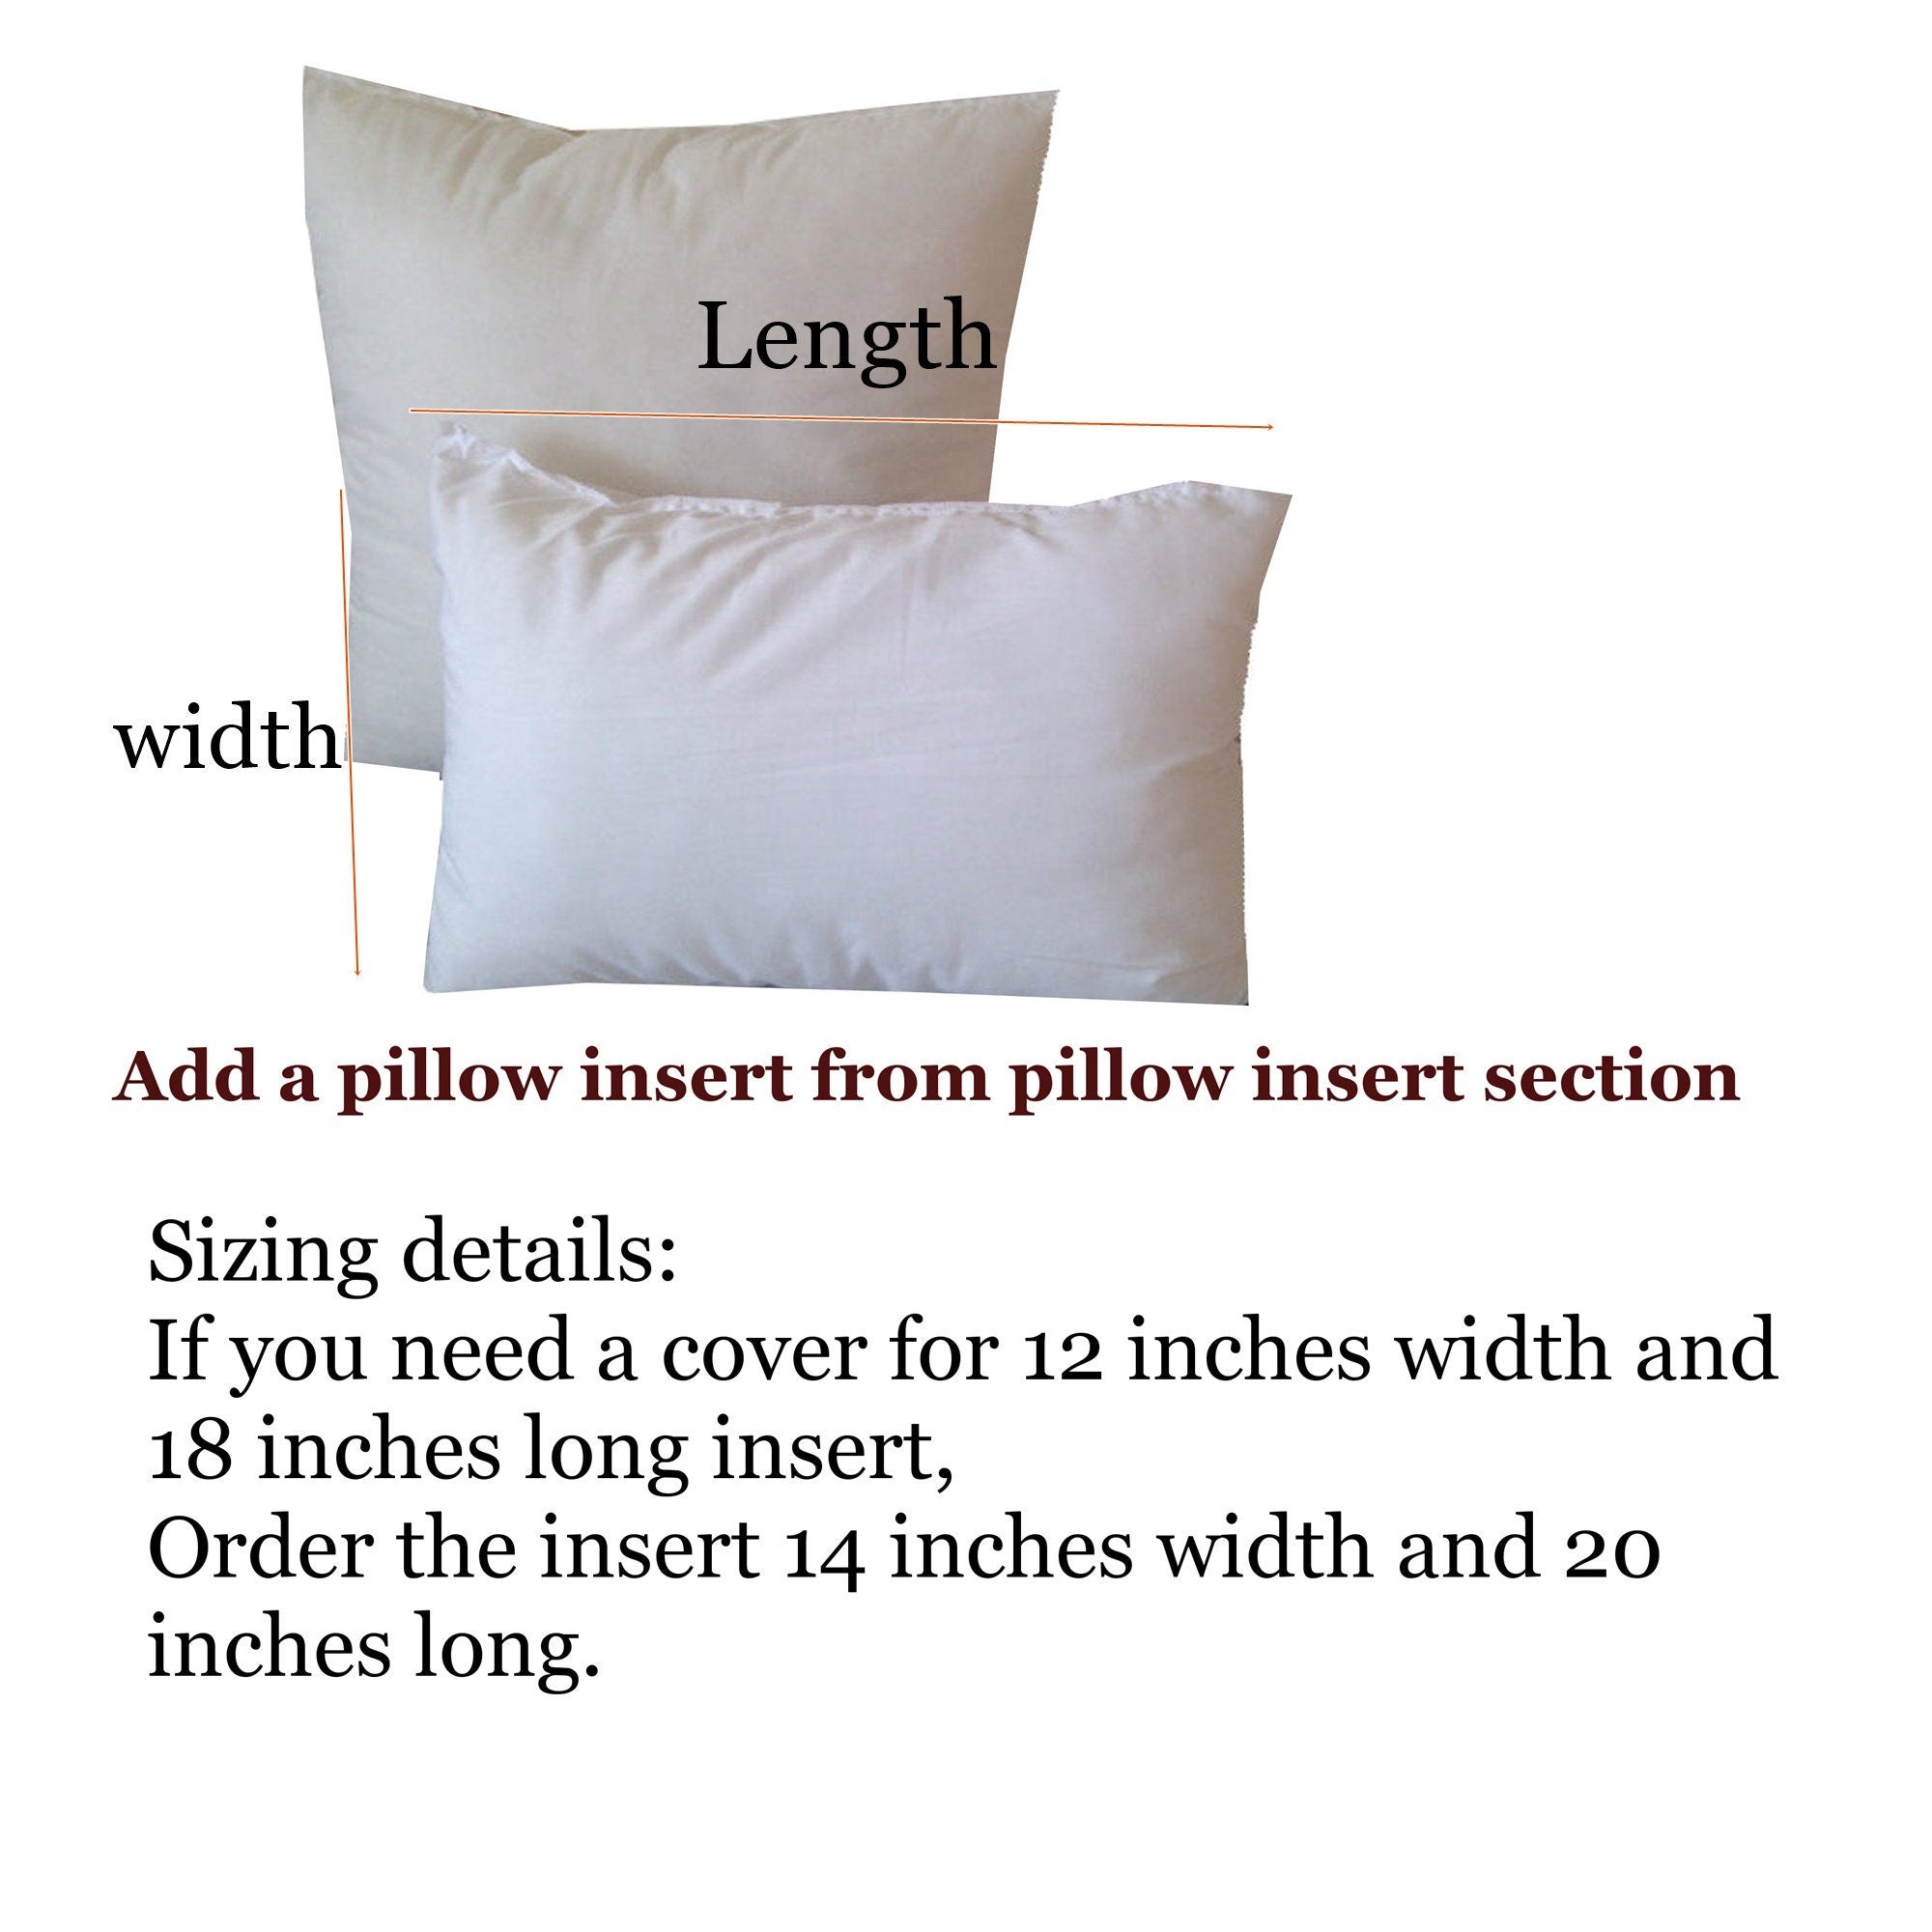 Lake Pillow, Beach House Accent Square Throw Pillows, Nautical Blue Pillows